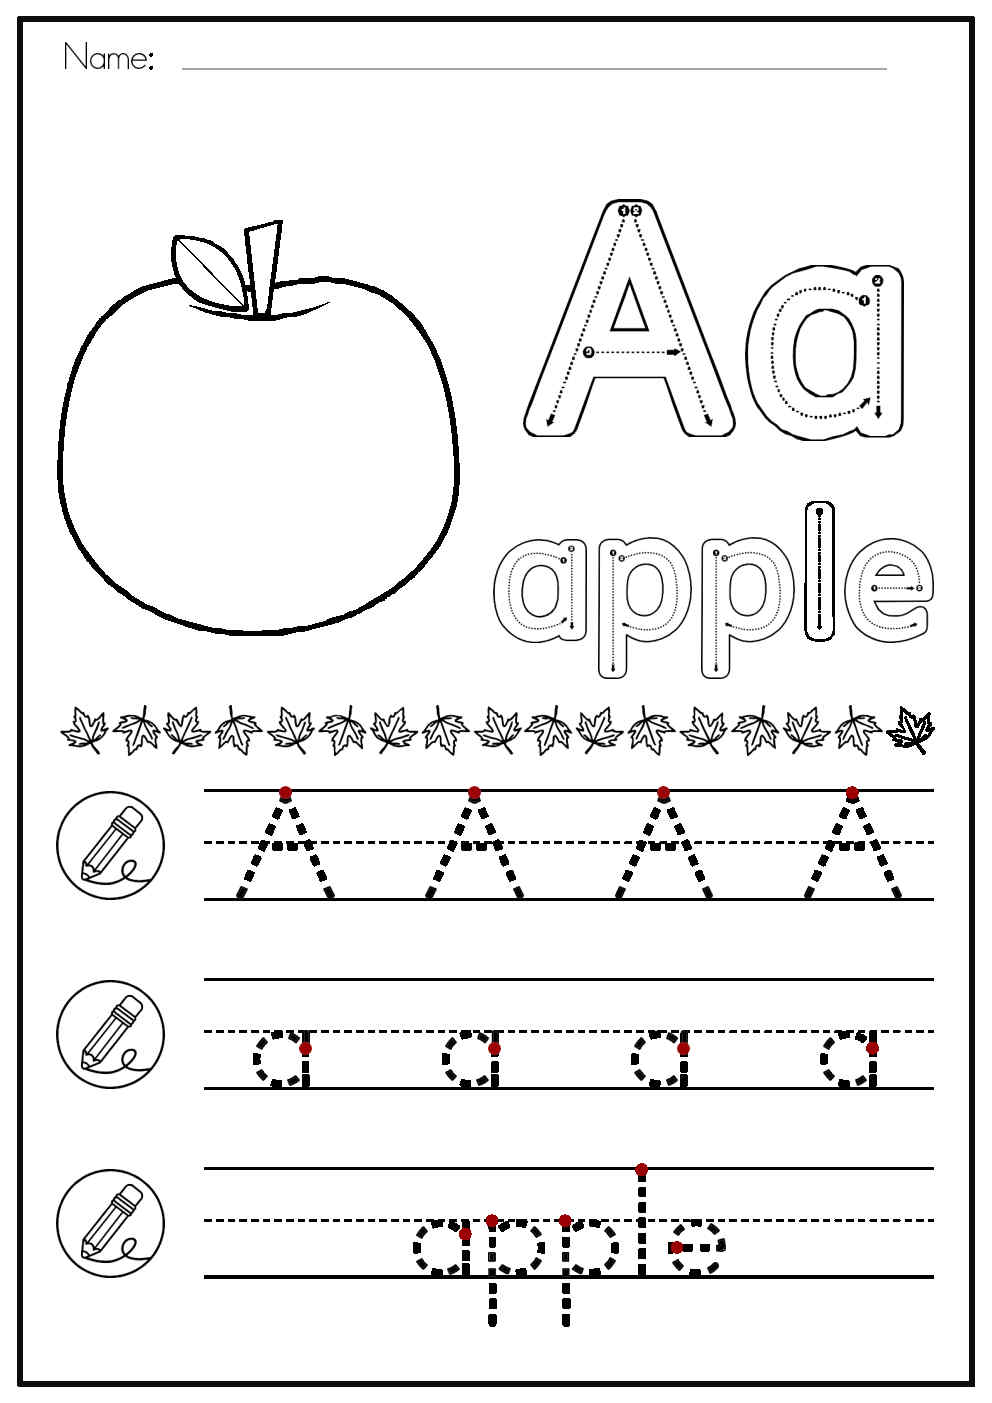 Preschool Worksheets Autumn: Preschoolers Will Love These 7 Autumn ...